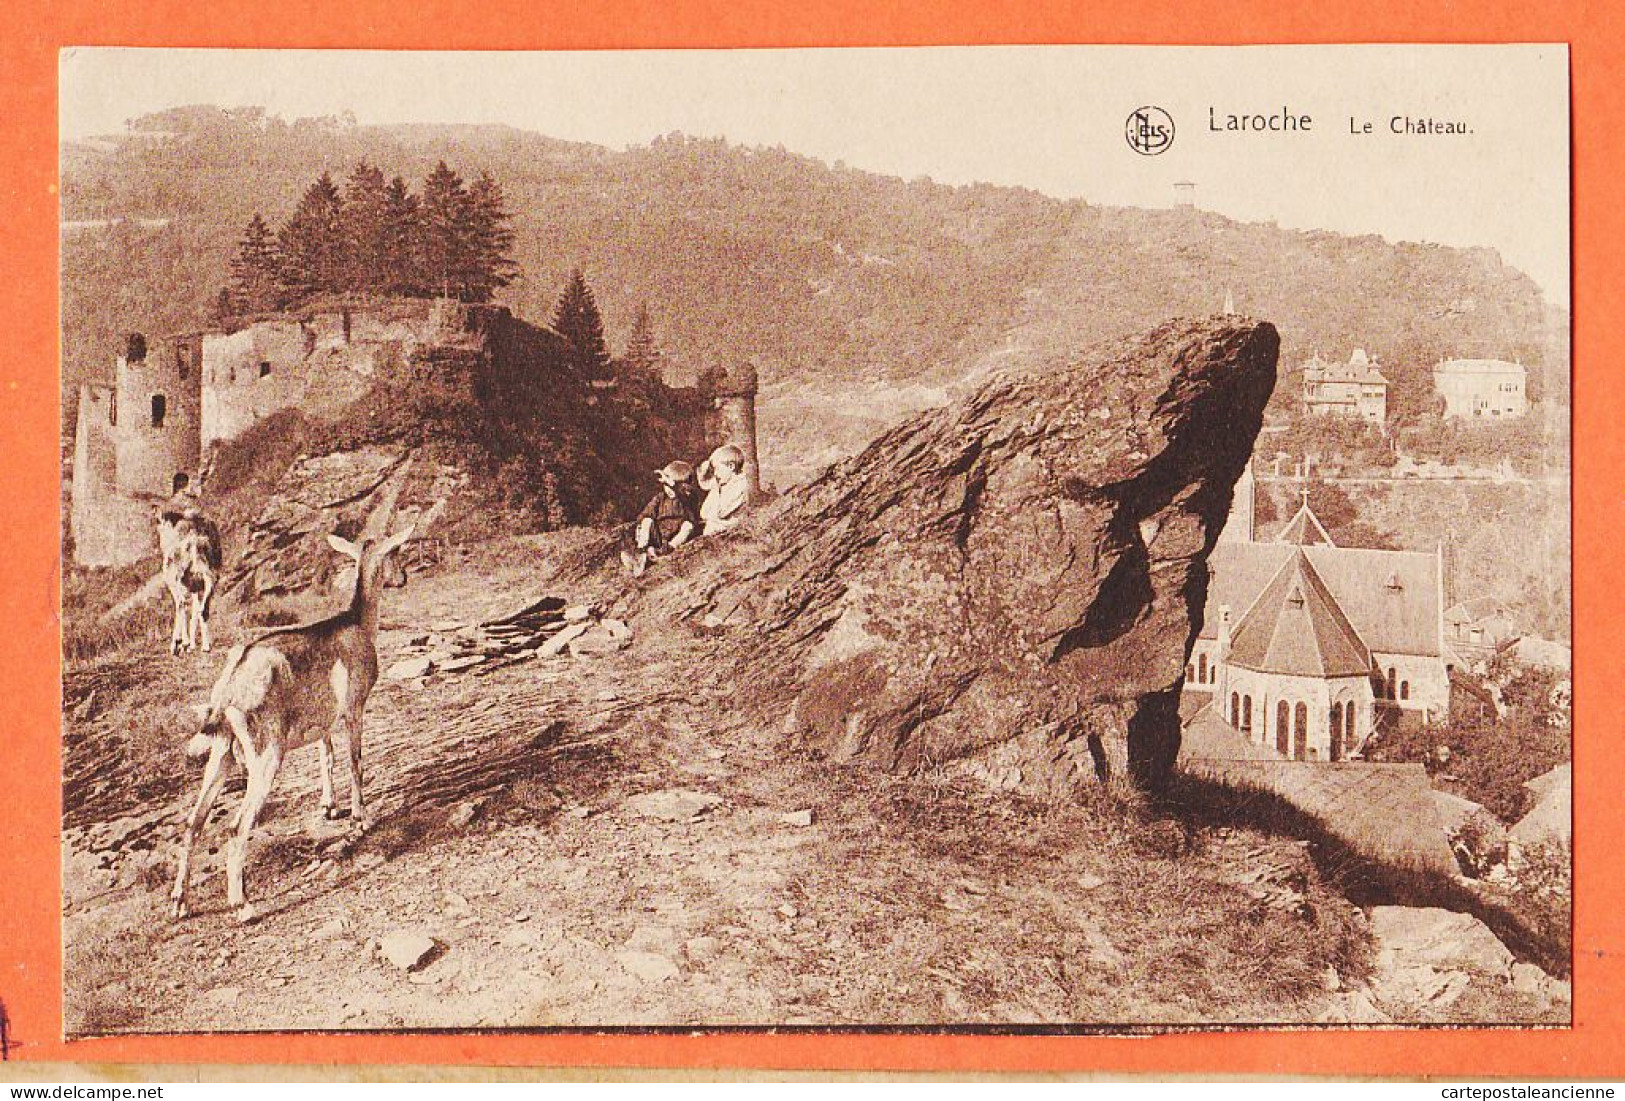 31503 / LAROCHE Belgique Chateau Enfants Chêvres 1920s ● Luxembourg La-Roche-en-Ardenne ● NELS THILL - La-Roche-en-Ardenne